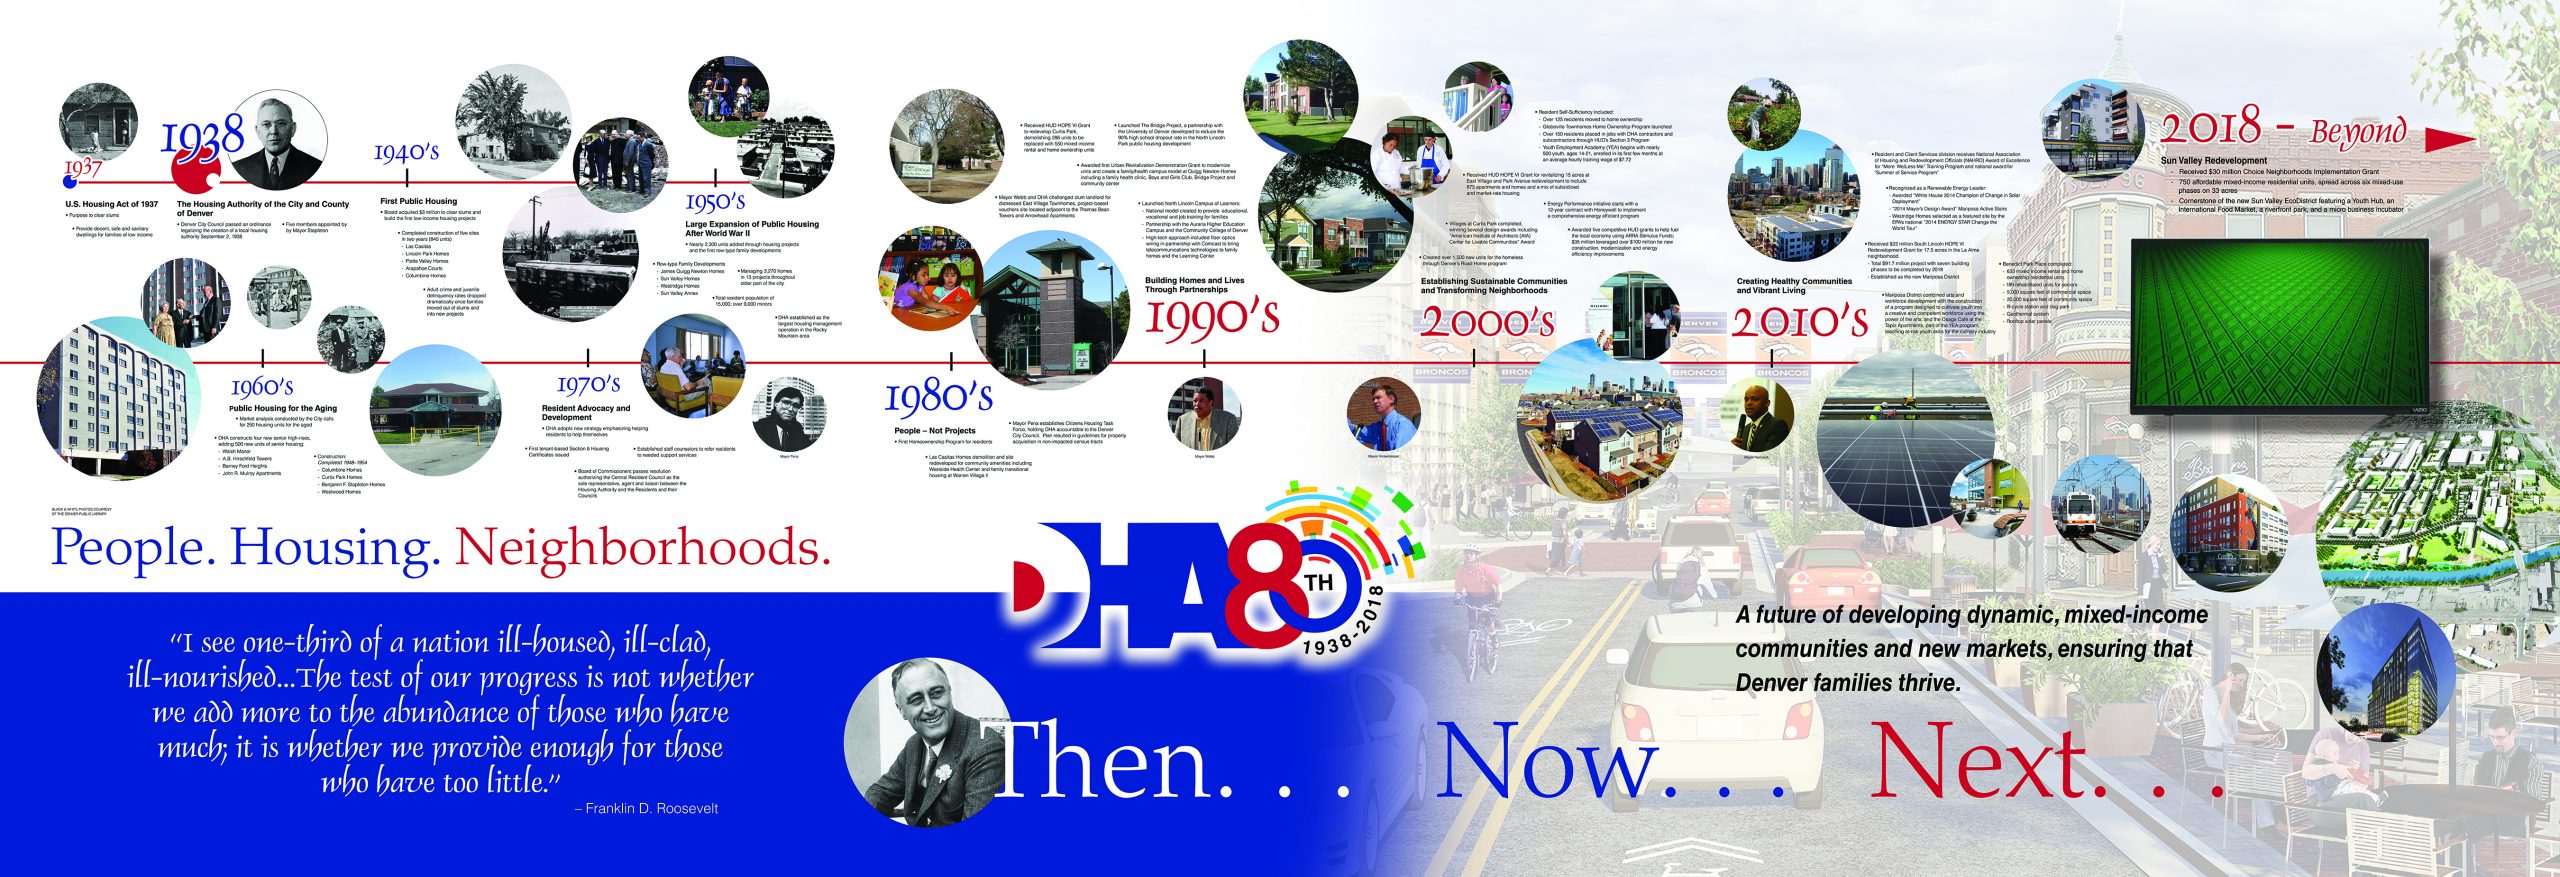 DHA History timeline 1